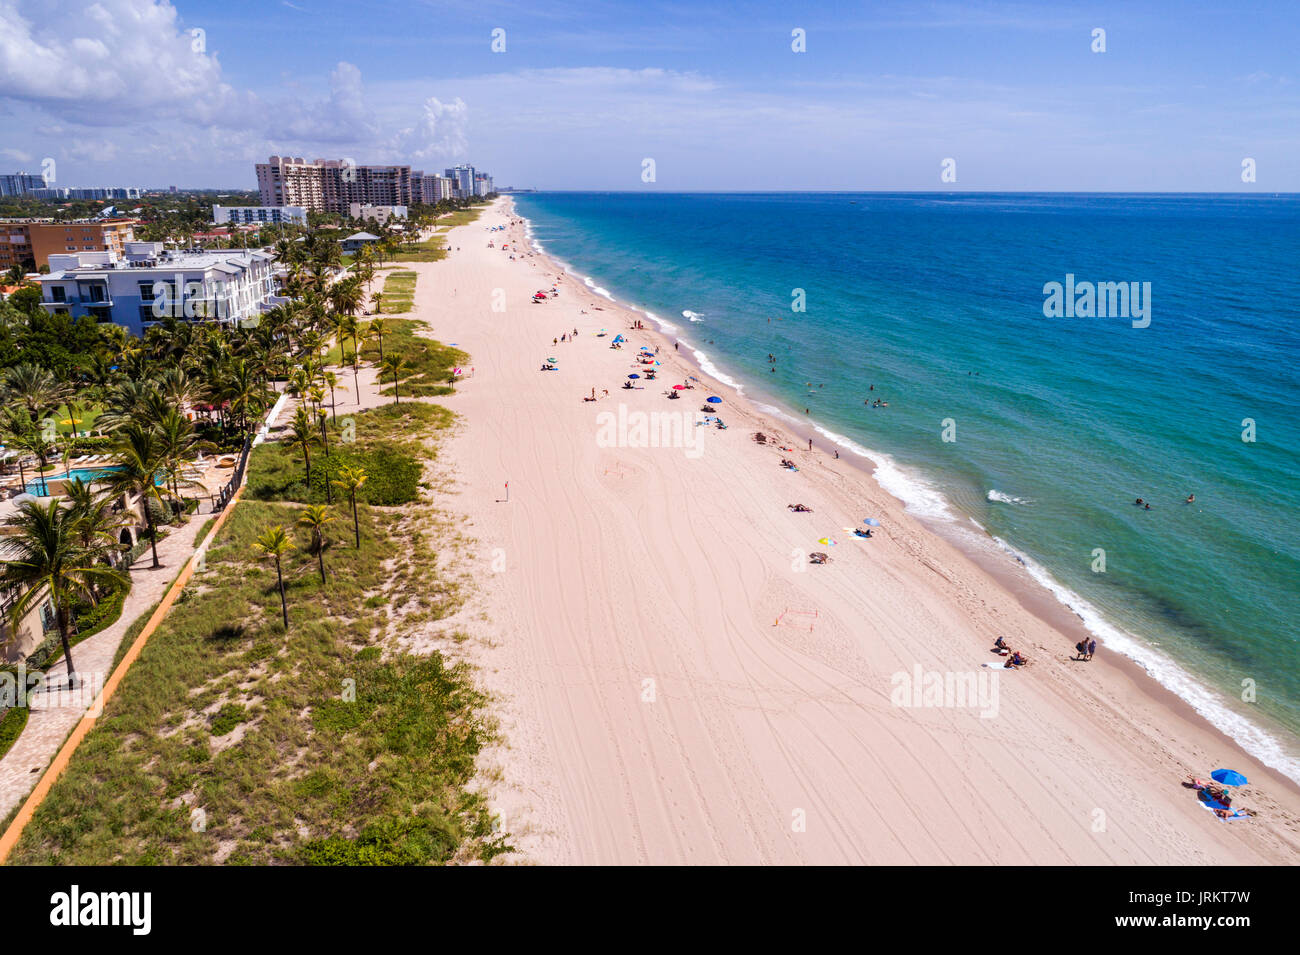 Florida,Lauderdale-By-The-Sea,Atlantic Ocean,sand,aerial overhead view,sunbathers,FL170728d05 Stock Photo